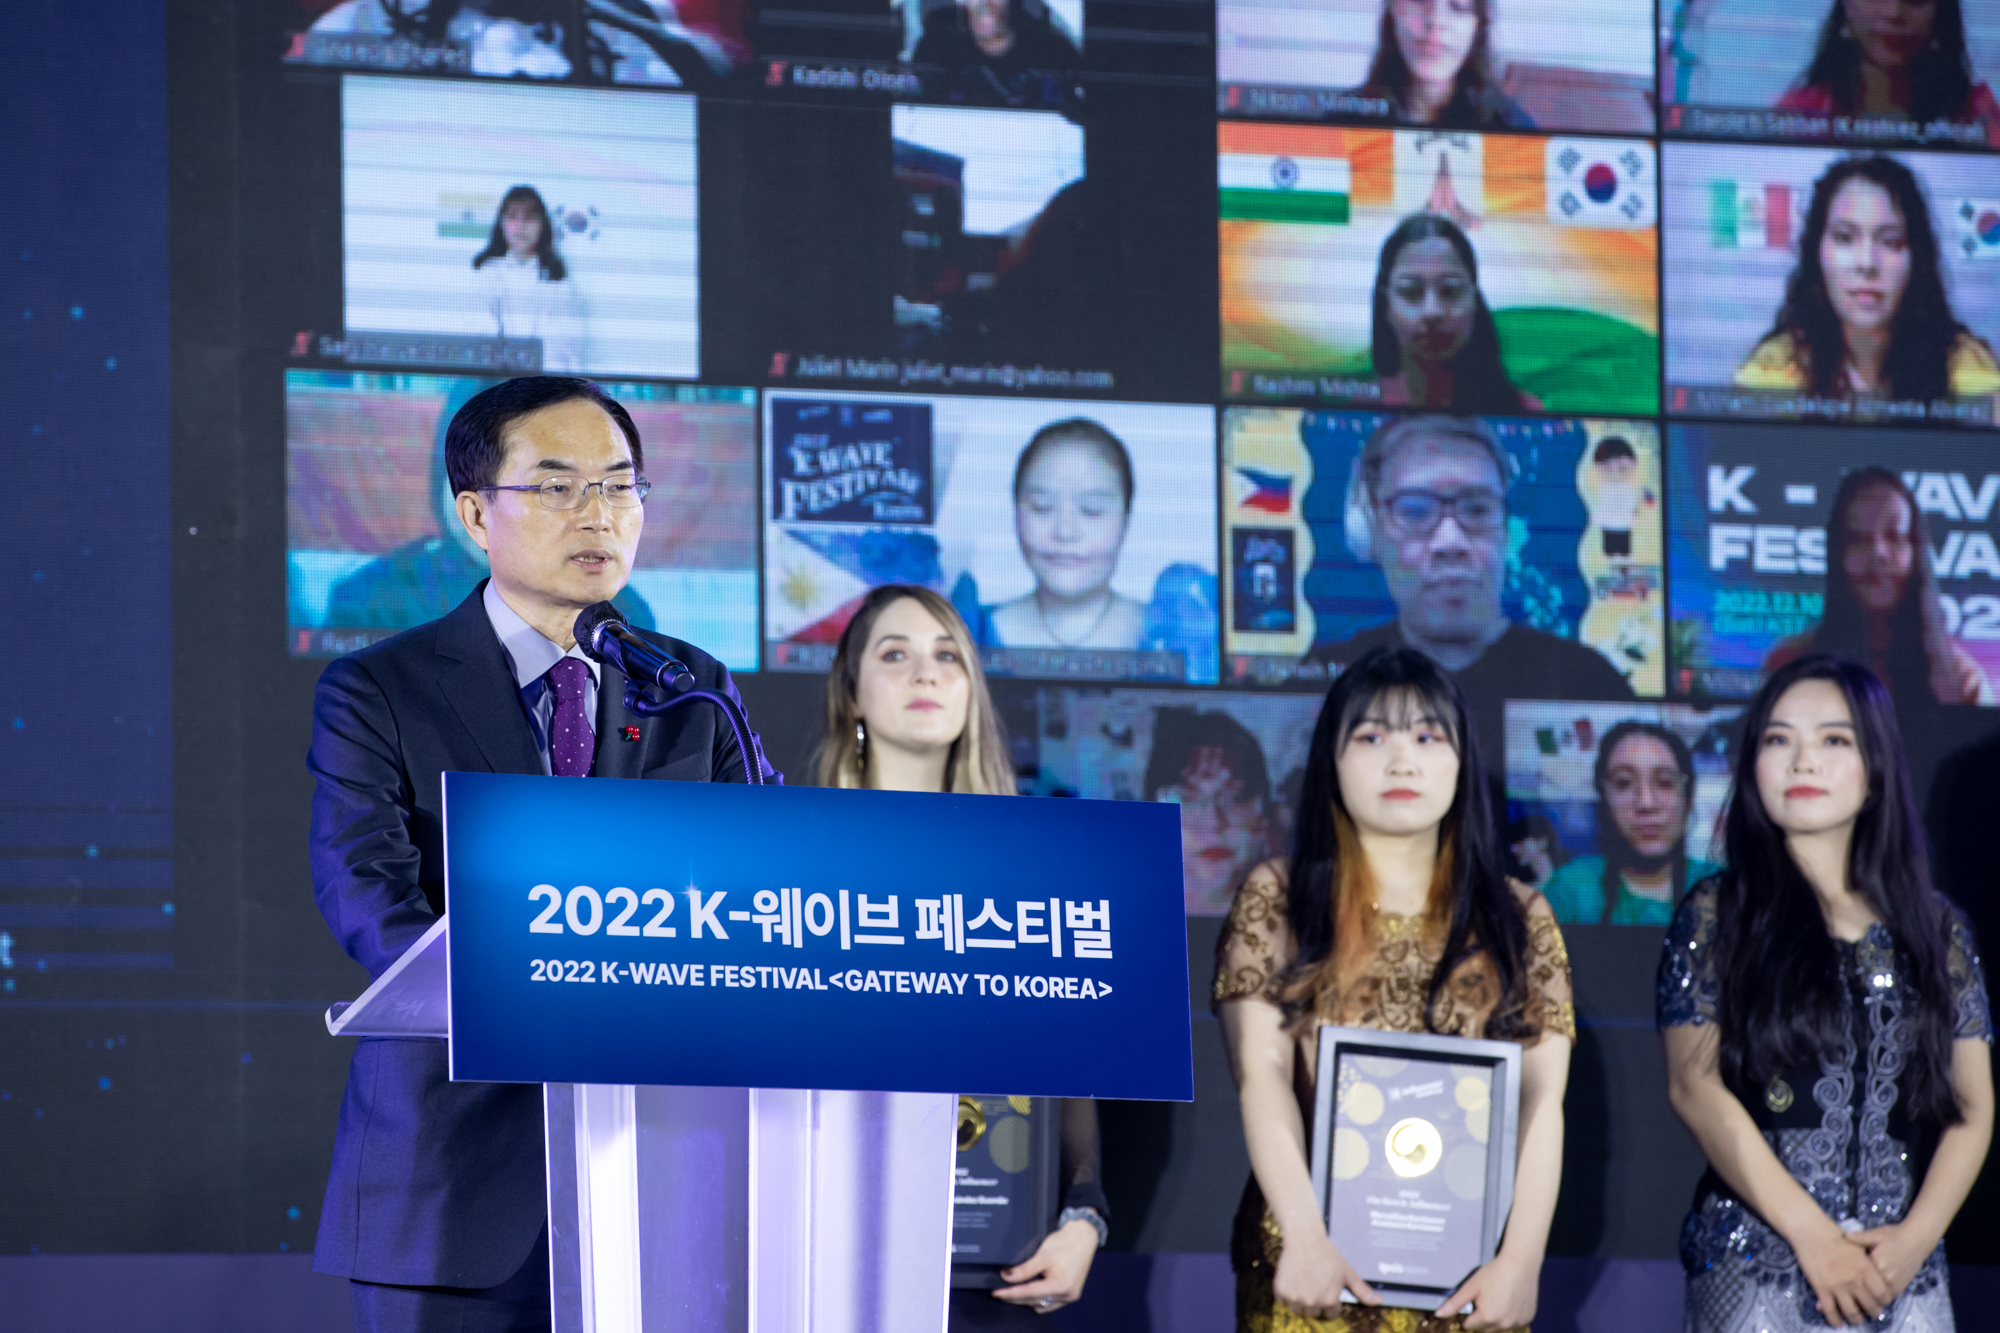 Wakil Menteri Kebudayaan, Olahraga, dan Pariwisata, Cho Yong-man sedang memberikan kata sambutan pada K-wave Festival yang diselenggarakan pada tanggal 10 Desember di KINTEX, Goyang, Provinsi Gyeonggi.